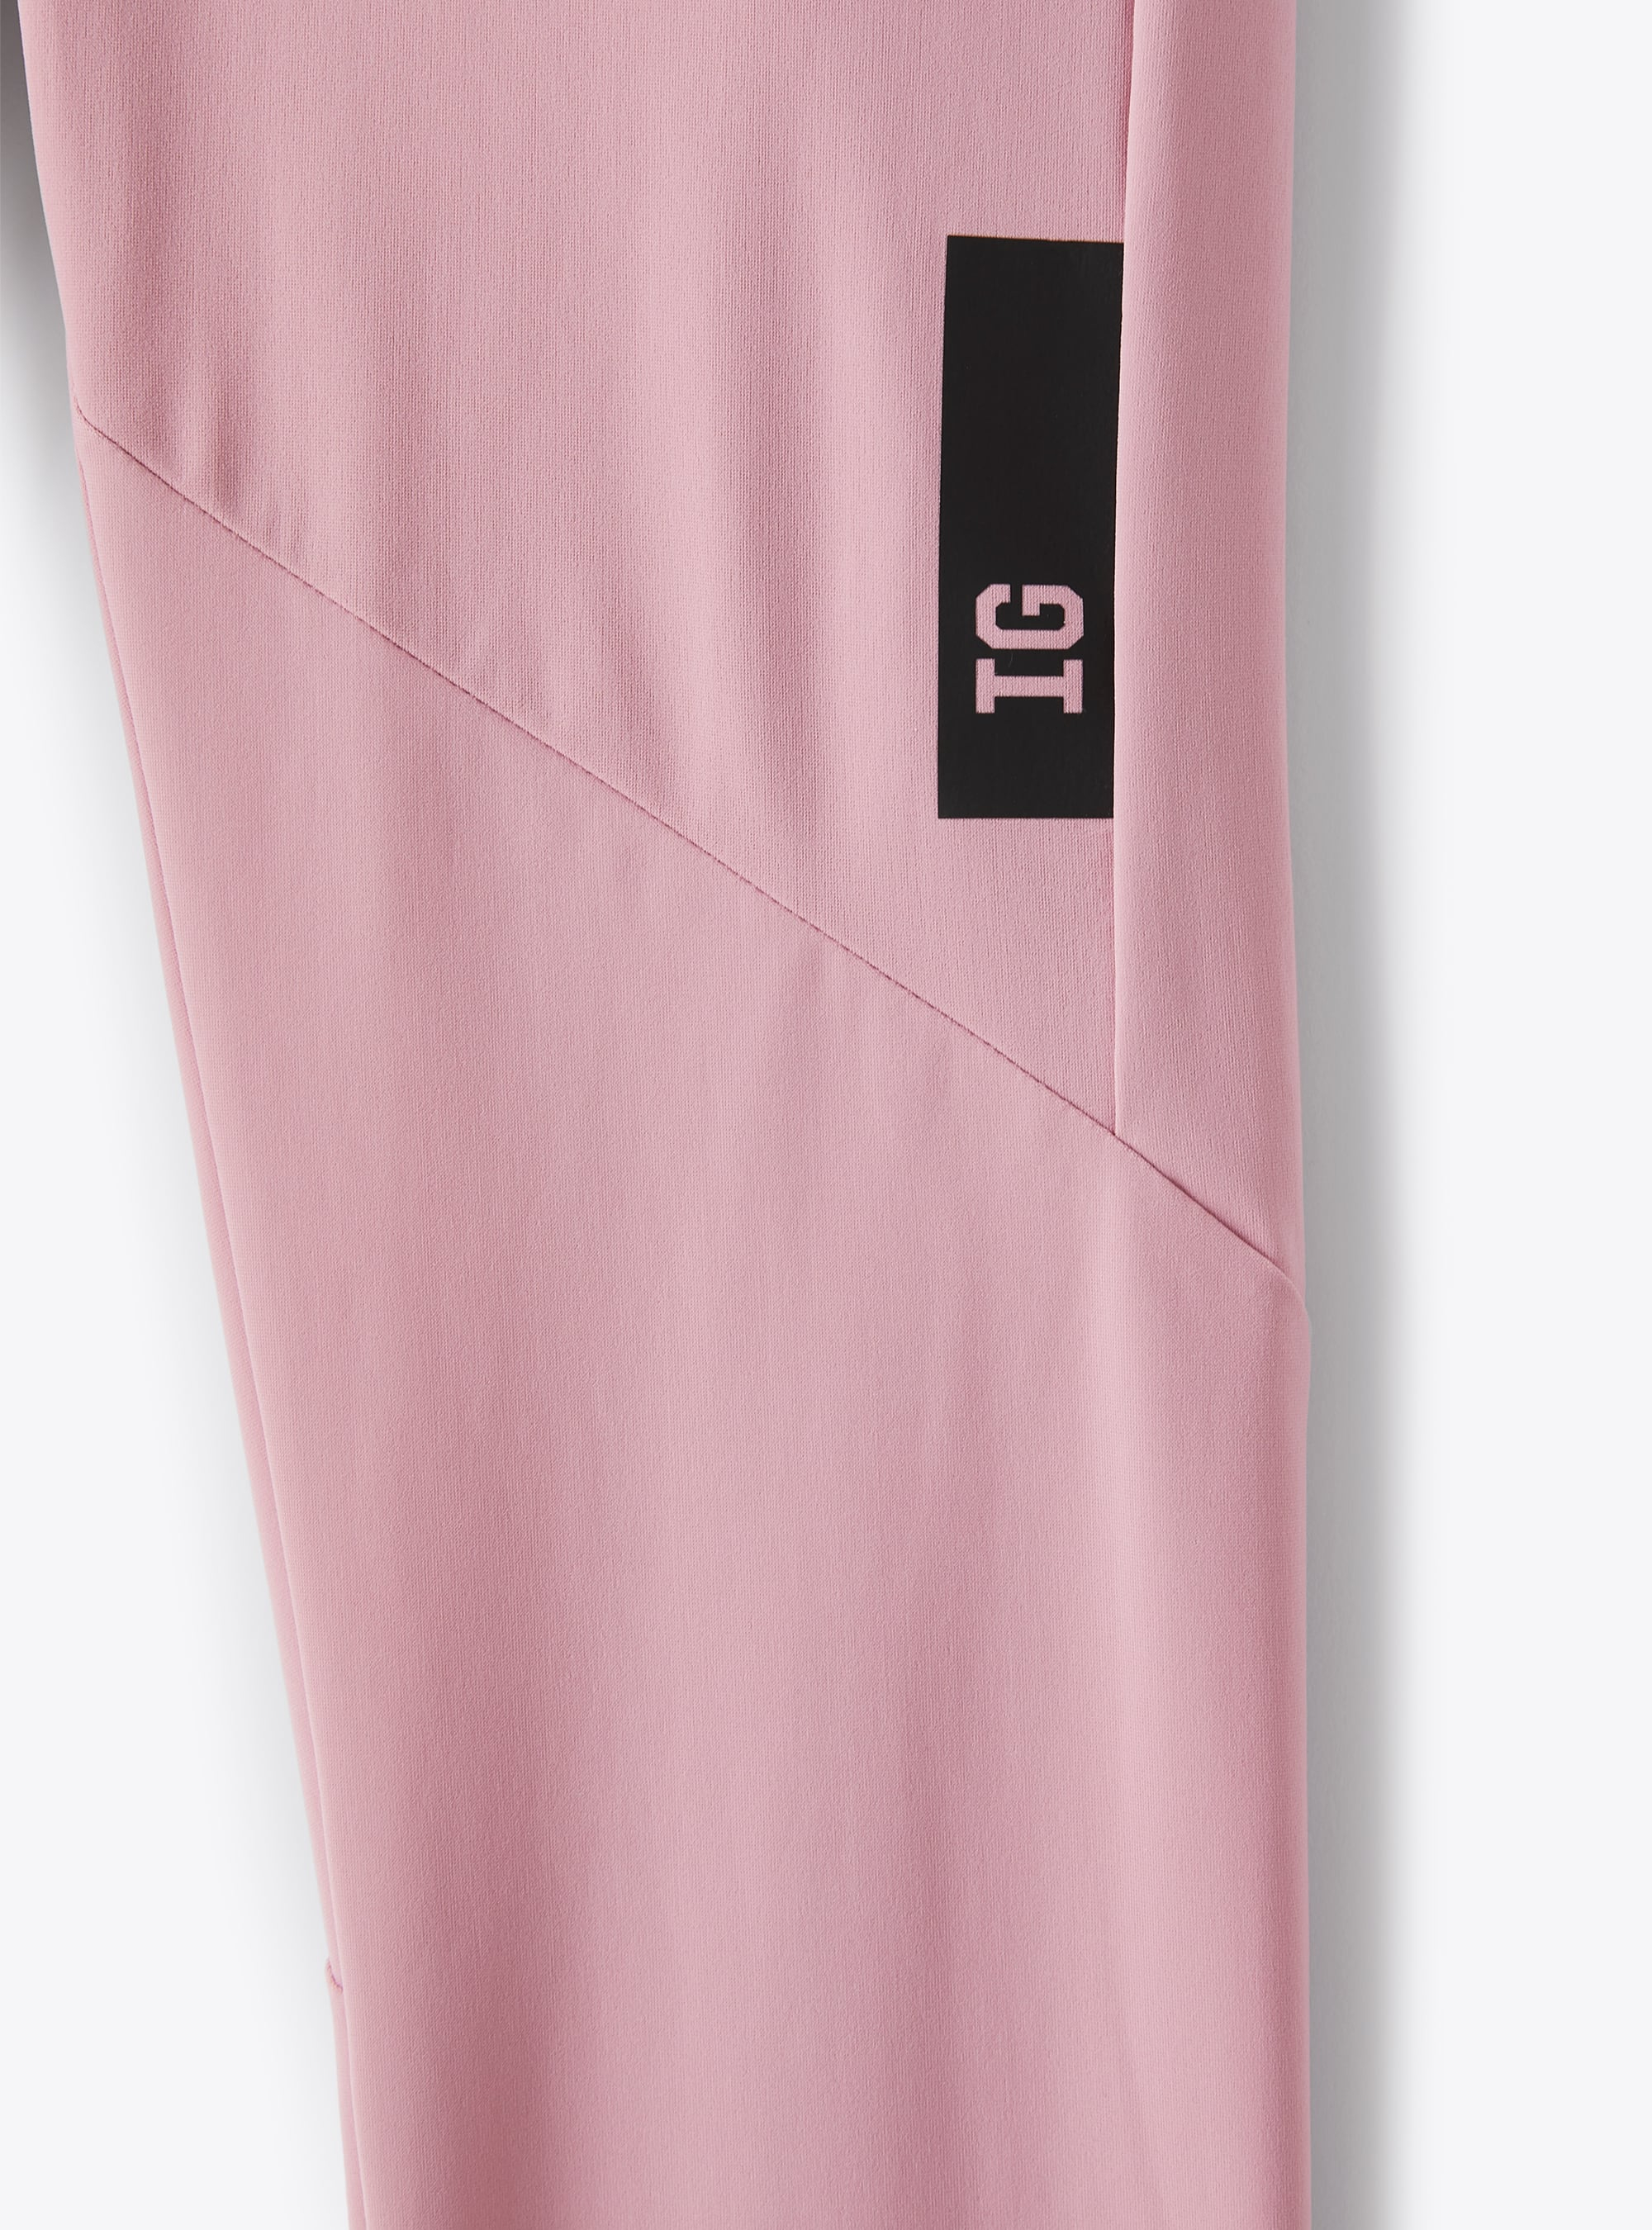 IG pink leggings - Pink | Il Gufo